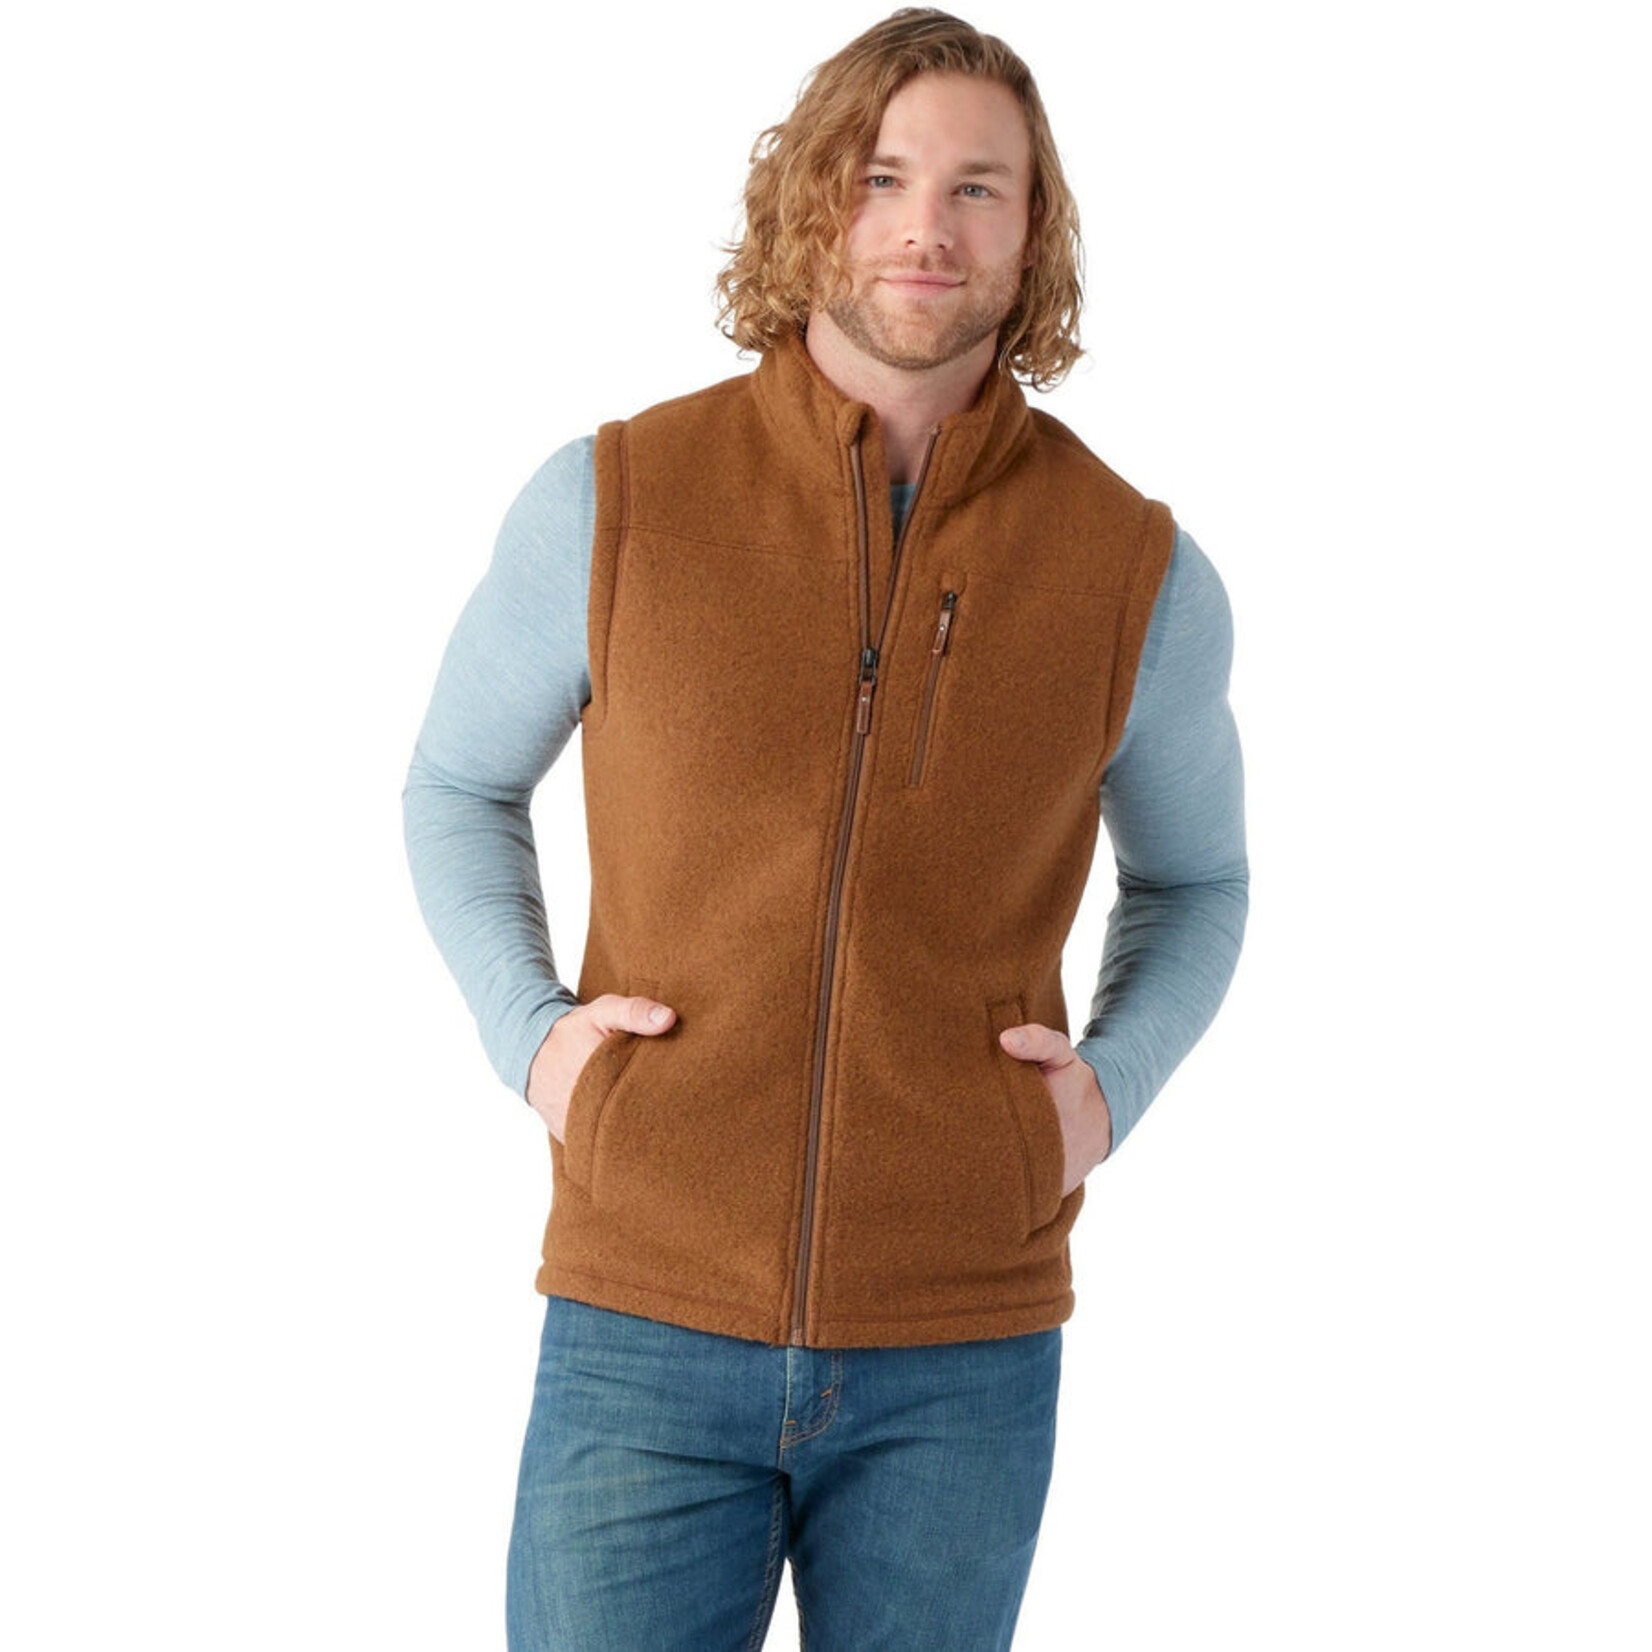 Smartwool Men's Hudson Trail Fleece Vest